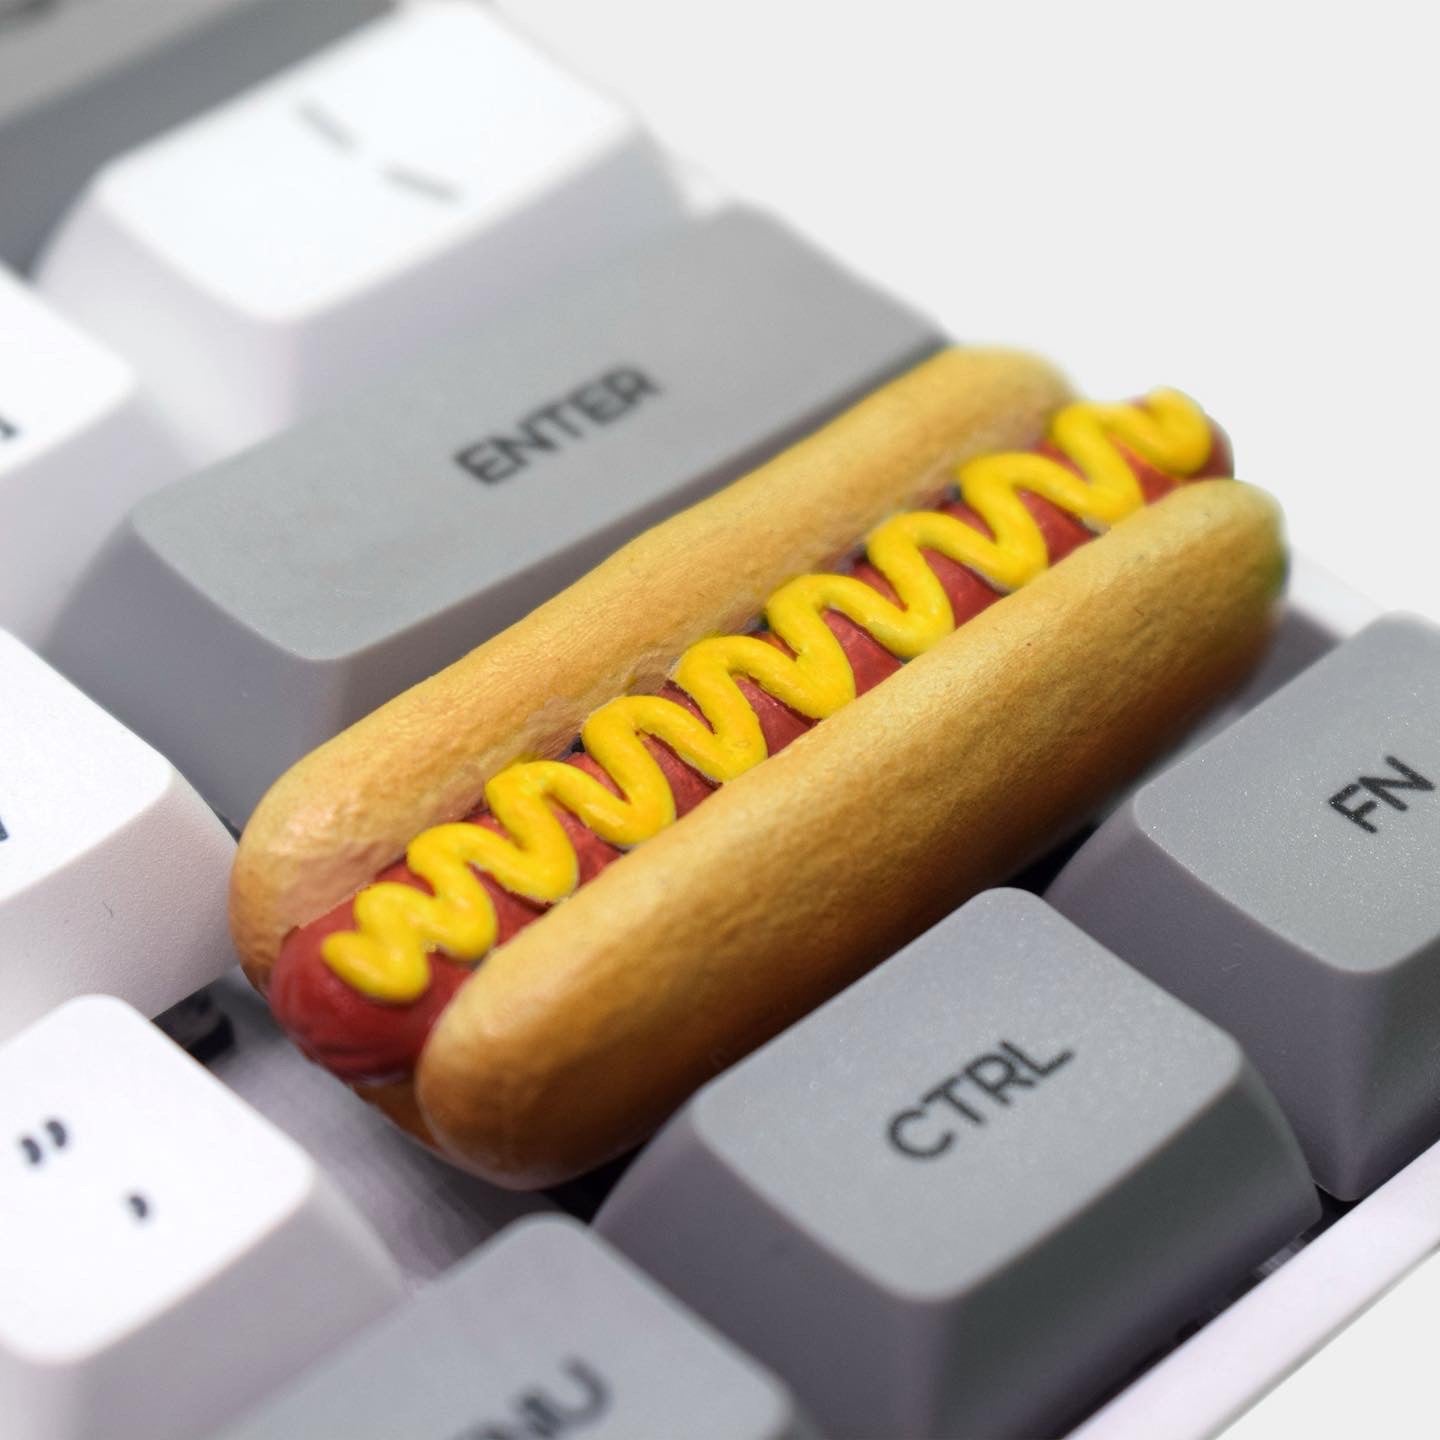 Hot Dog de Oficina